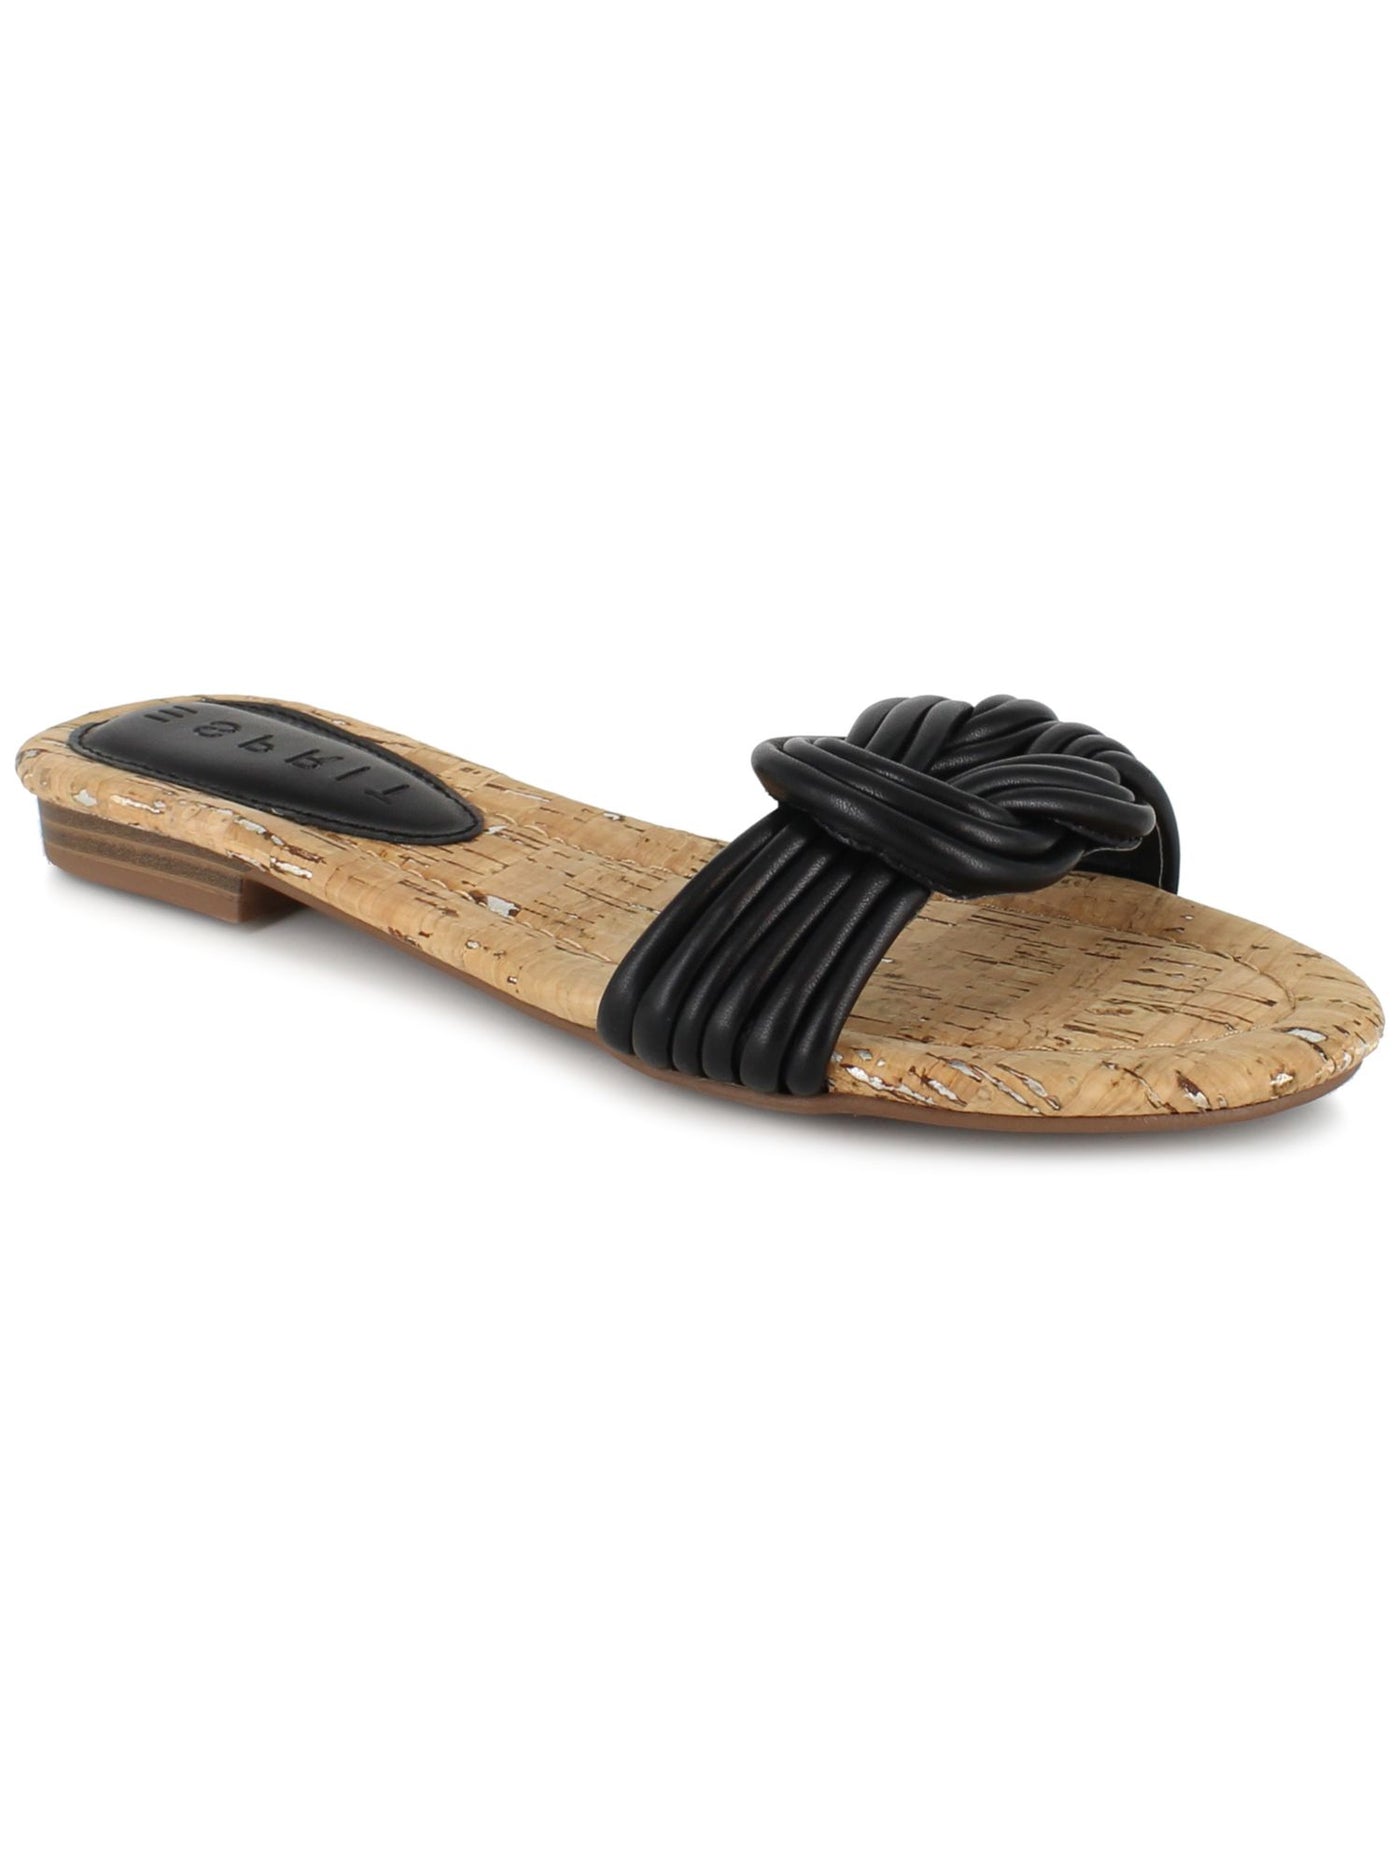 ESPRIT Womens Black Knot Detail Cork-Like Footbed Flexible Sole Padded Strappy Katelyn Open Toe Slip On Slide Sandals Shoes 9 M